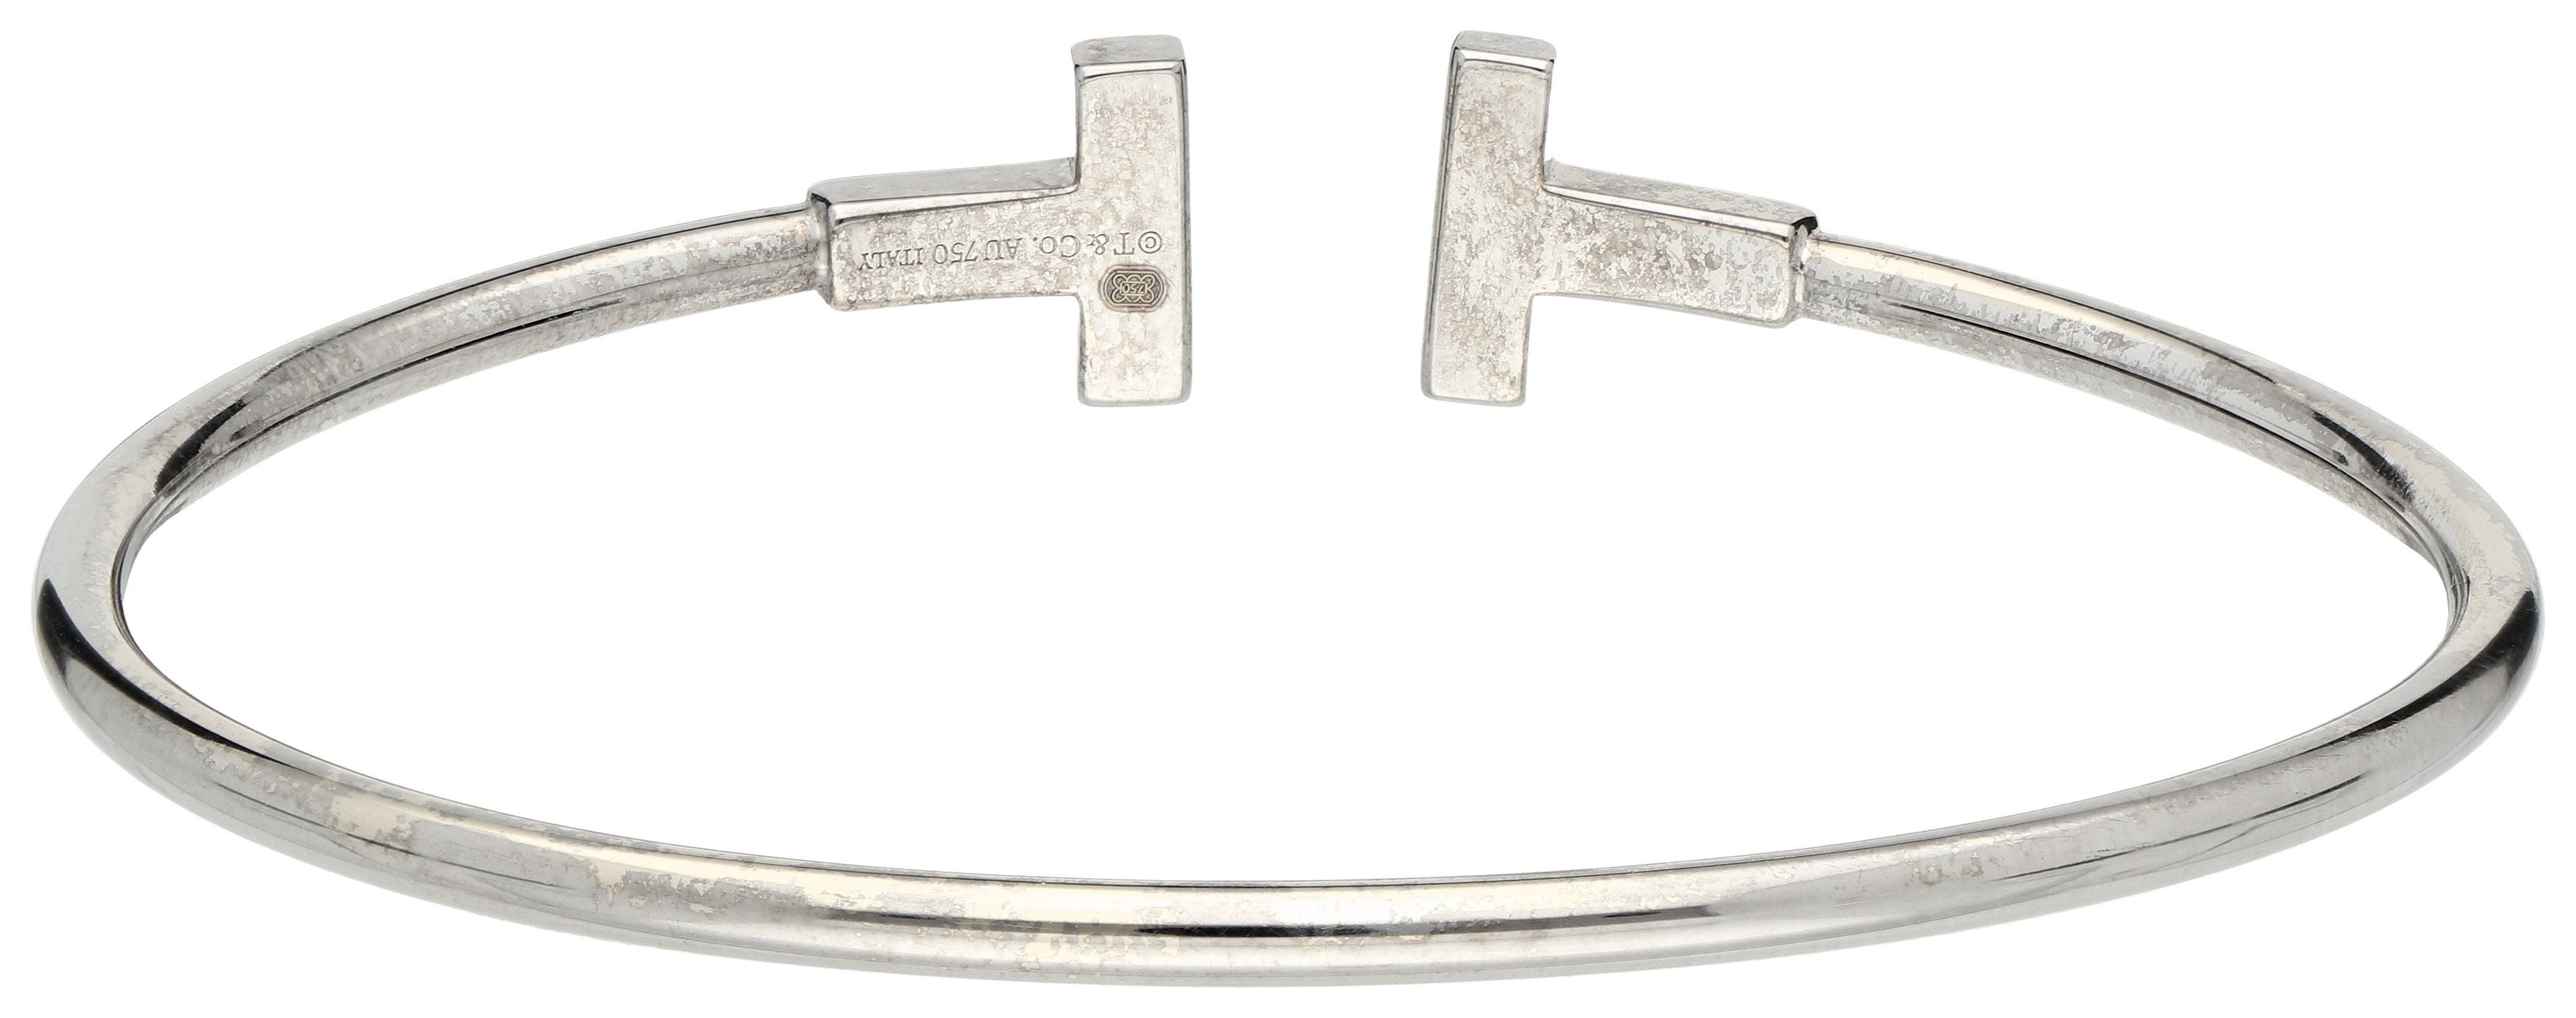 No Reserve - Tiffany & Co 18K white gold T-wire bracelet - Image 2 of 3